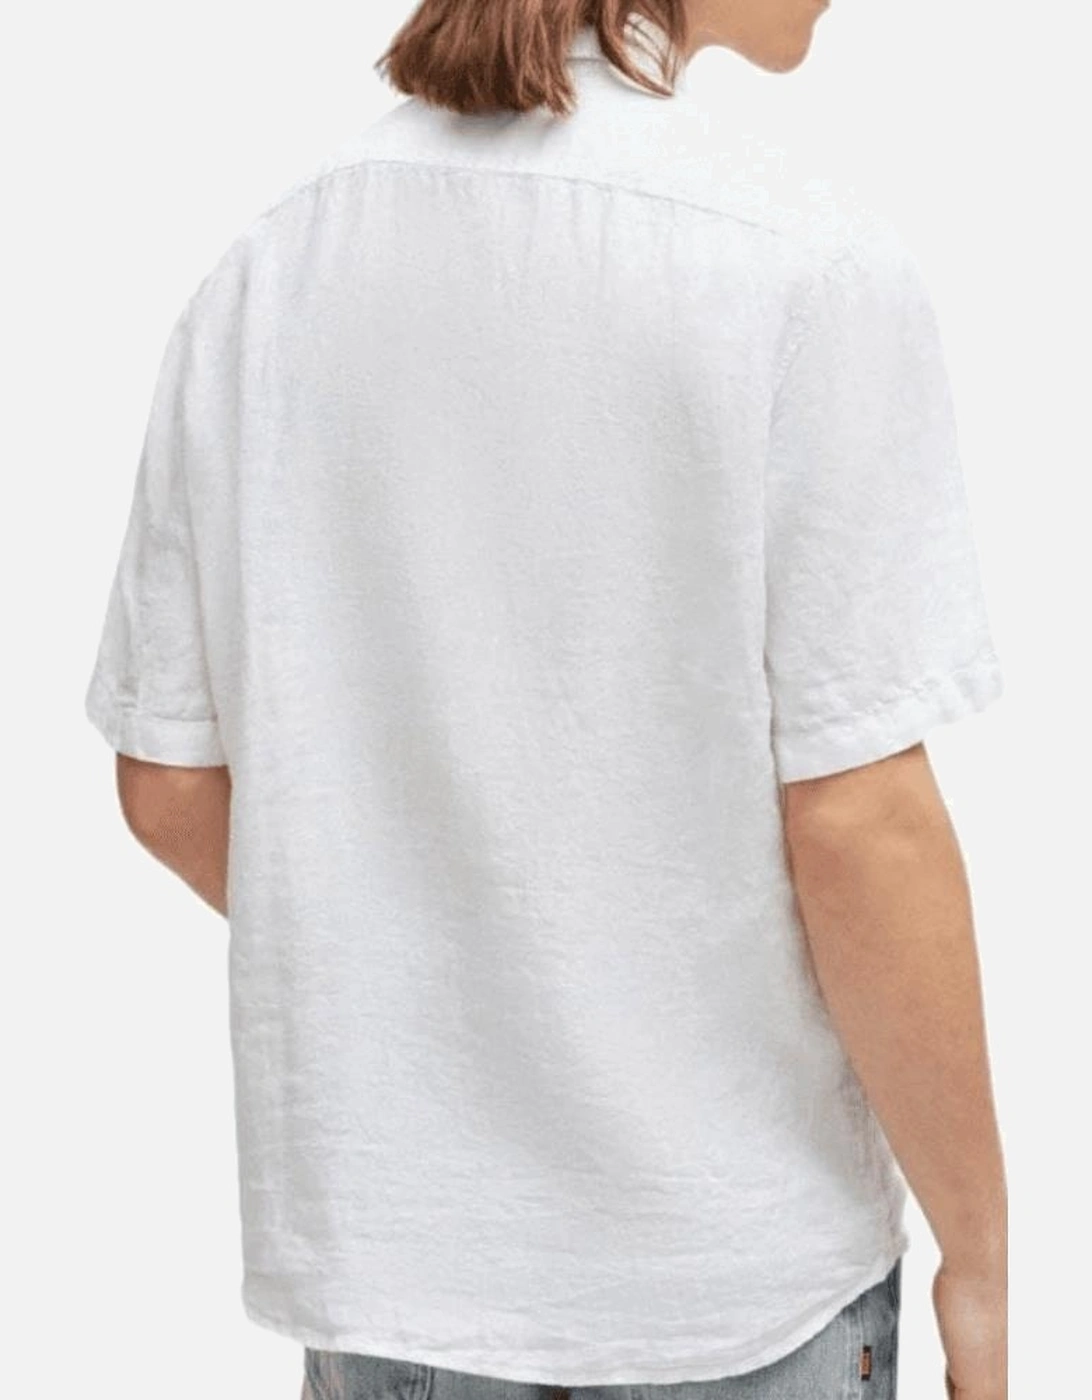 Rash_2 Linen Slim Fit Short Sleeve White Shirt